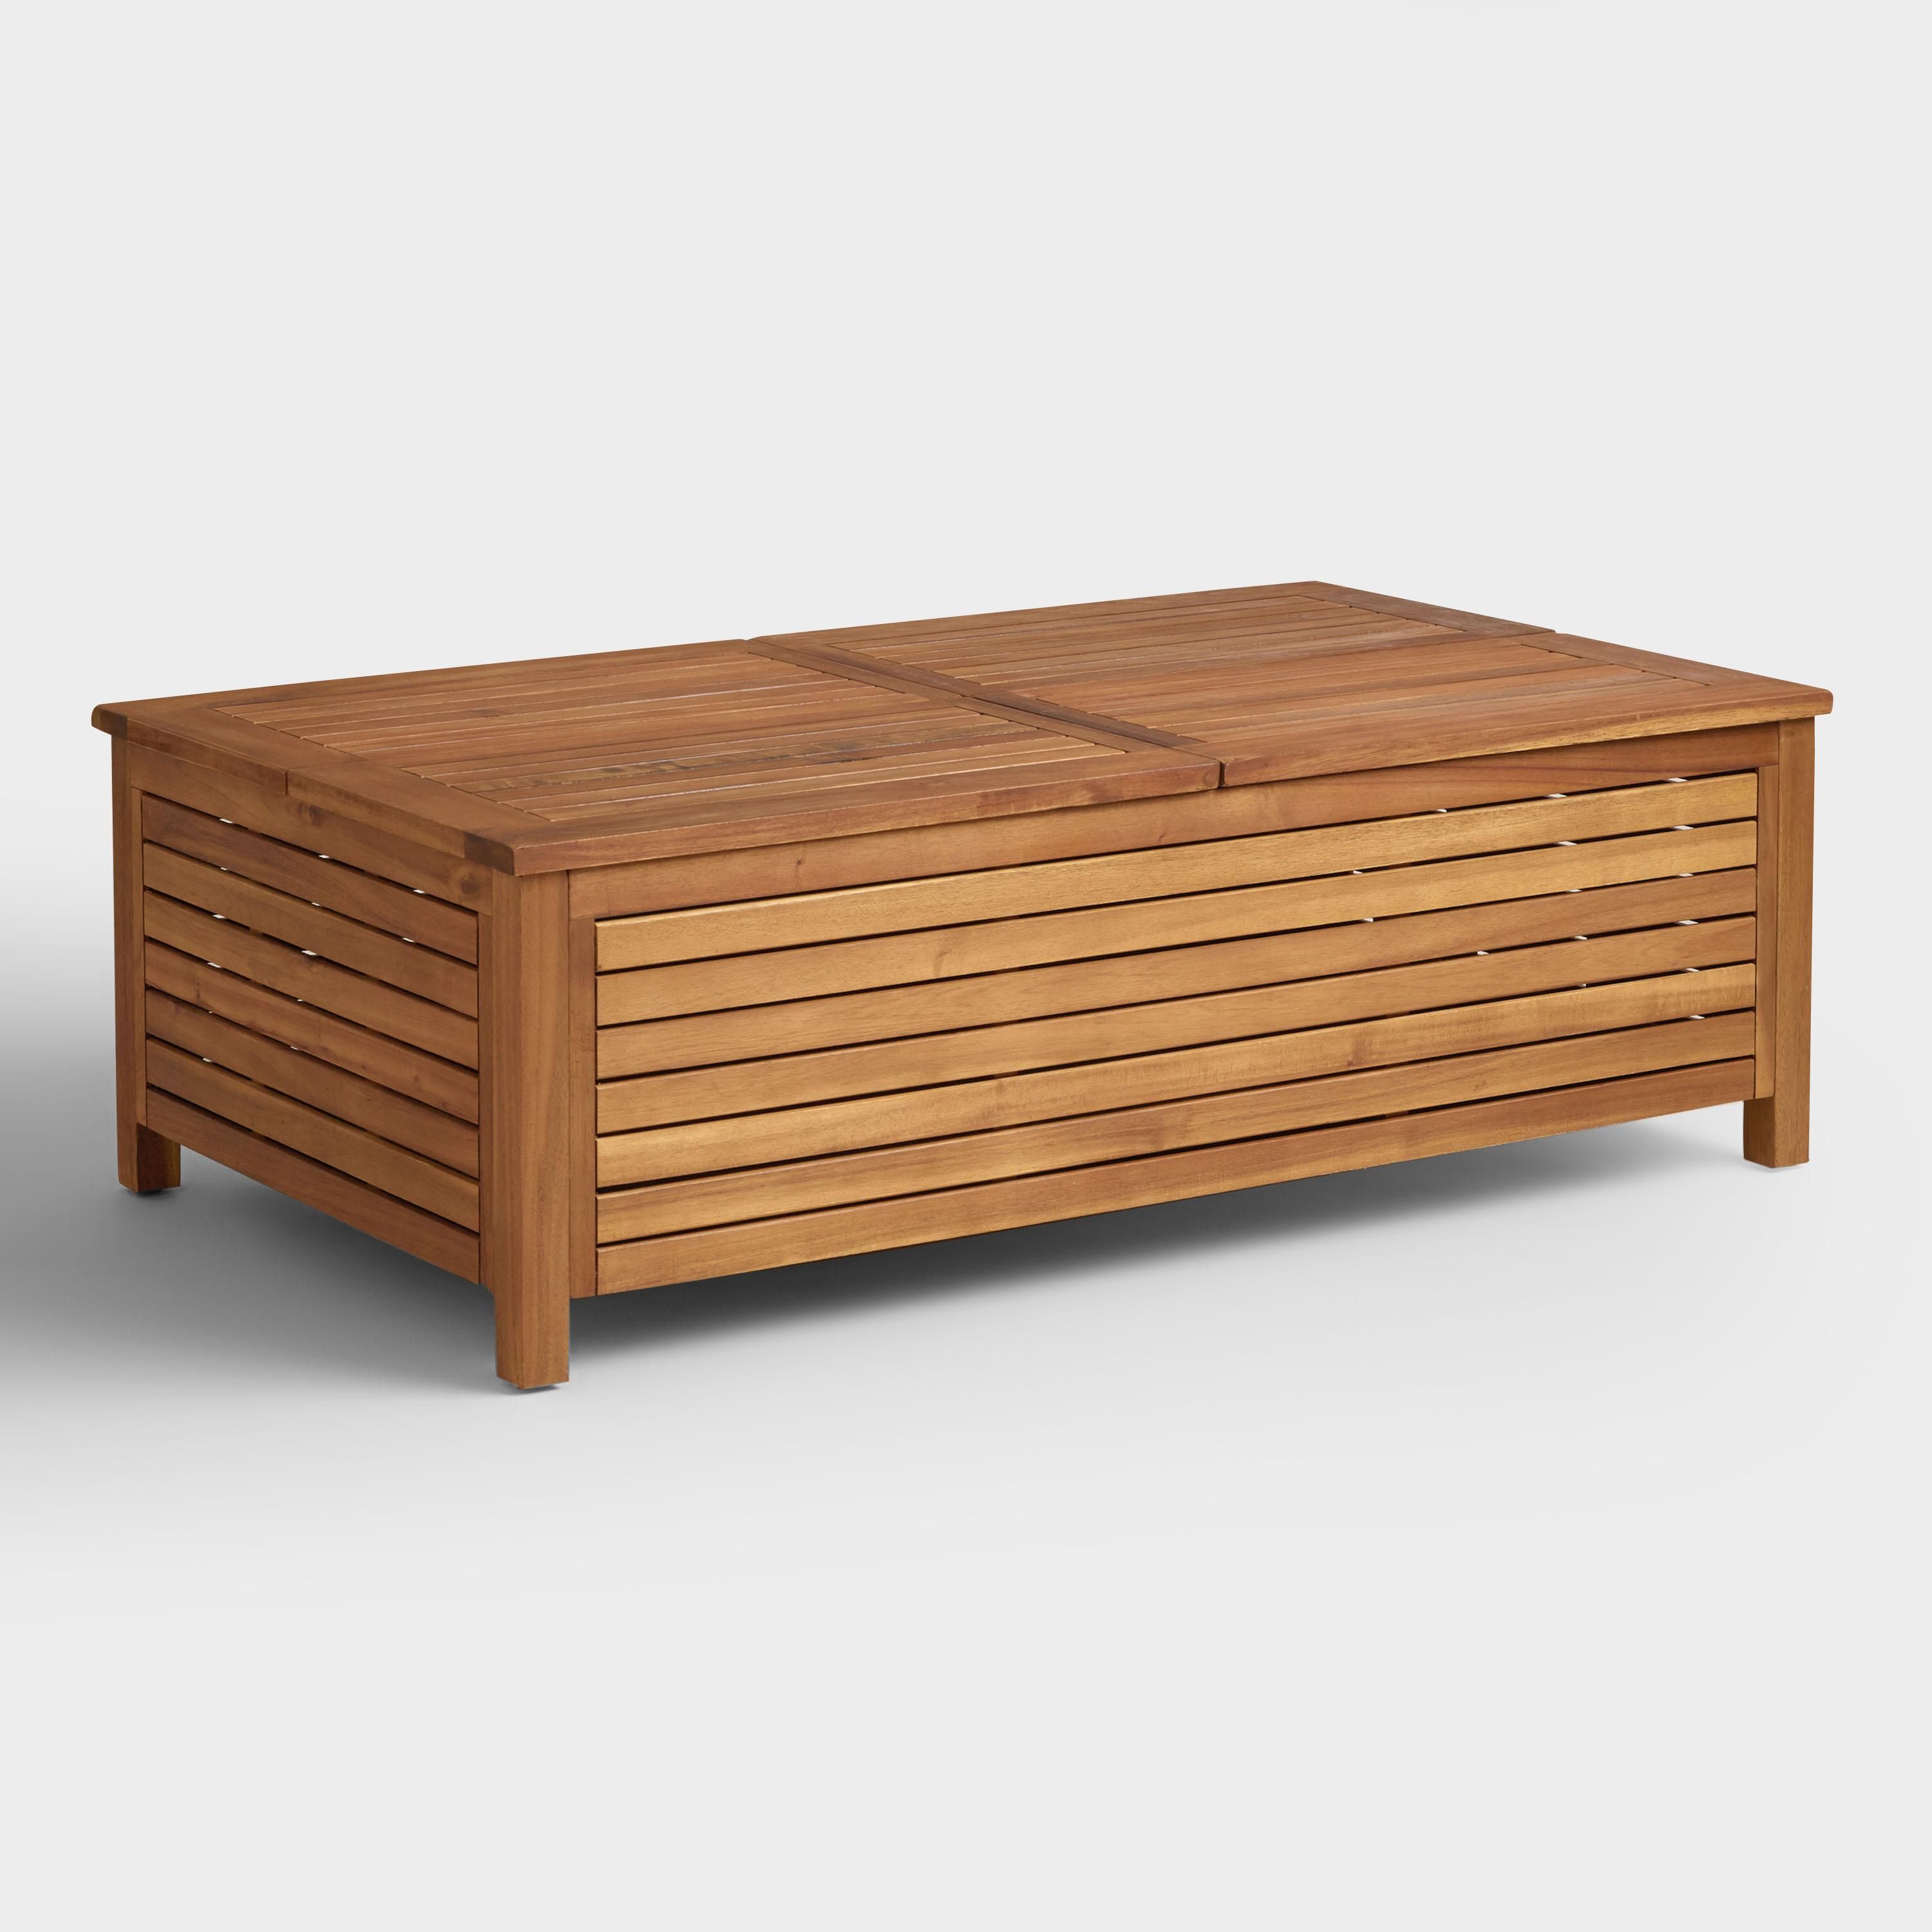 Wood Praiano Outdoor Storage Coffee Table | World Market